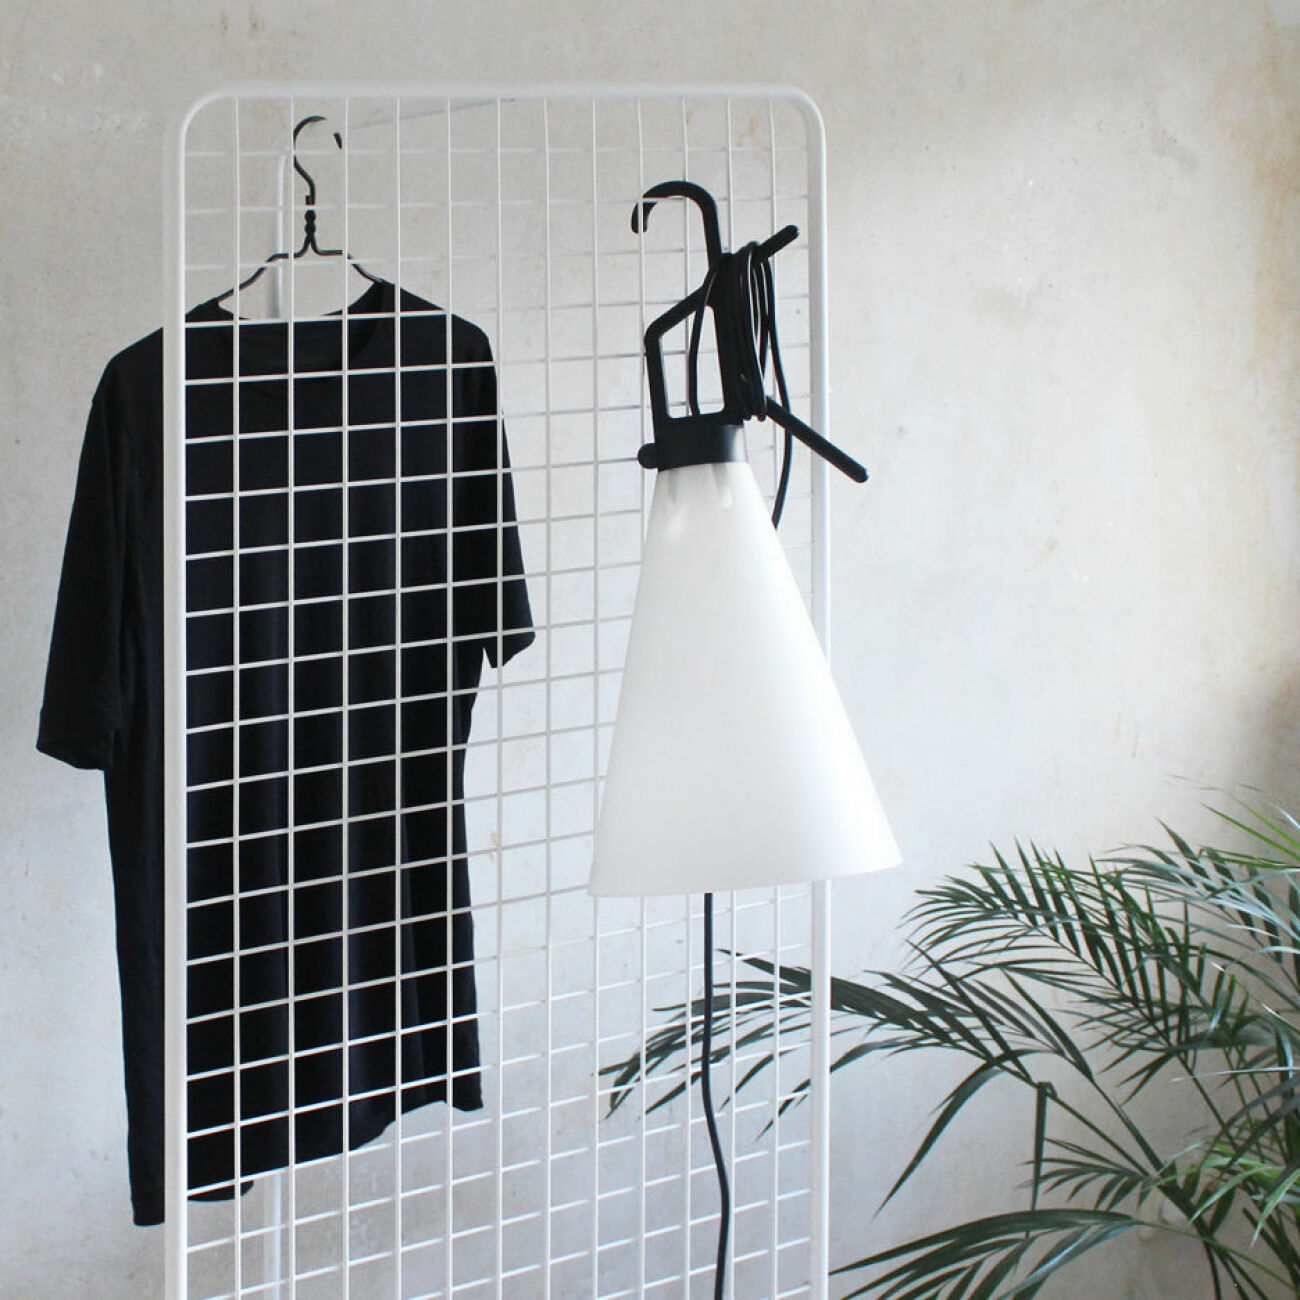 grid-thomas-schnur-milan-wire-clothing-rail-furniture_dezeen_sq2